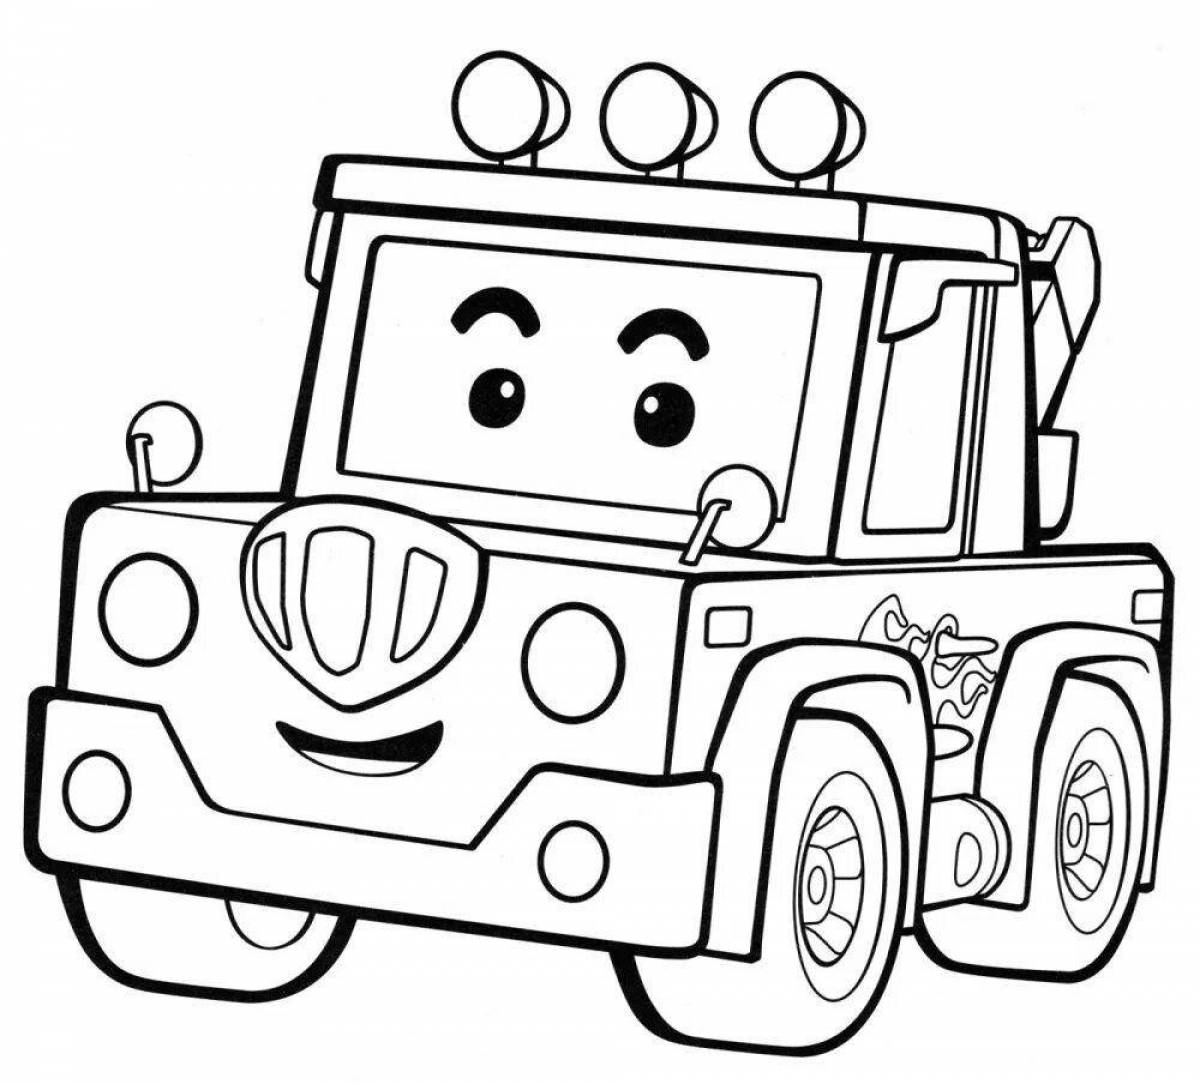 Poly robocar fire truck coloring book